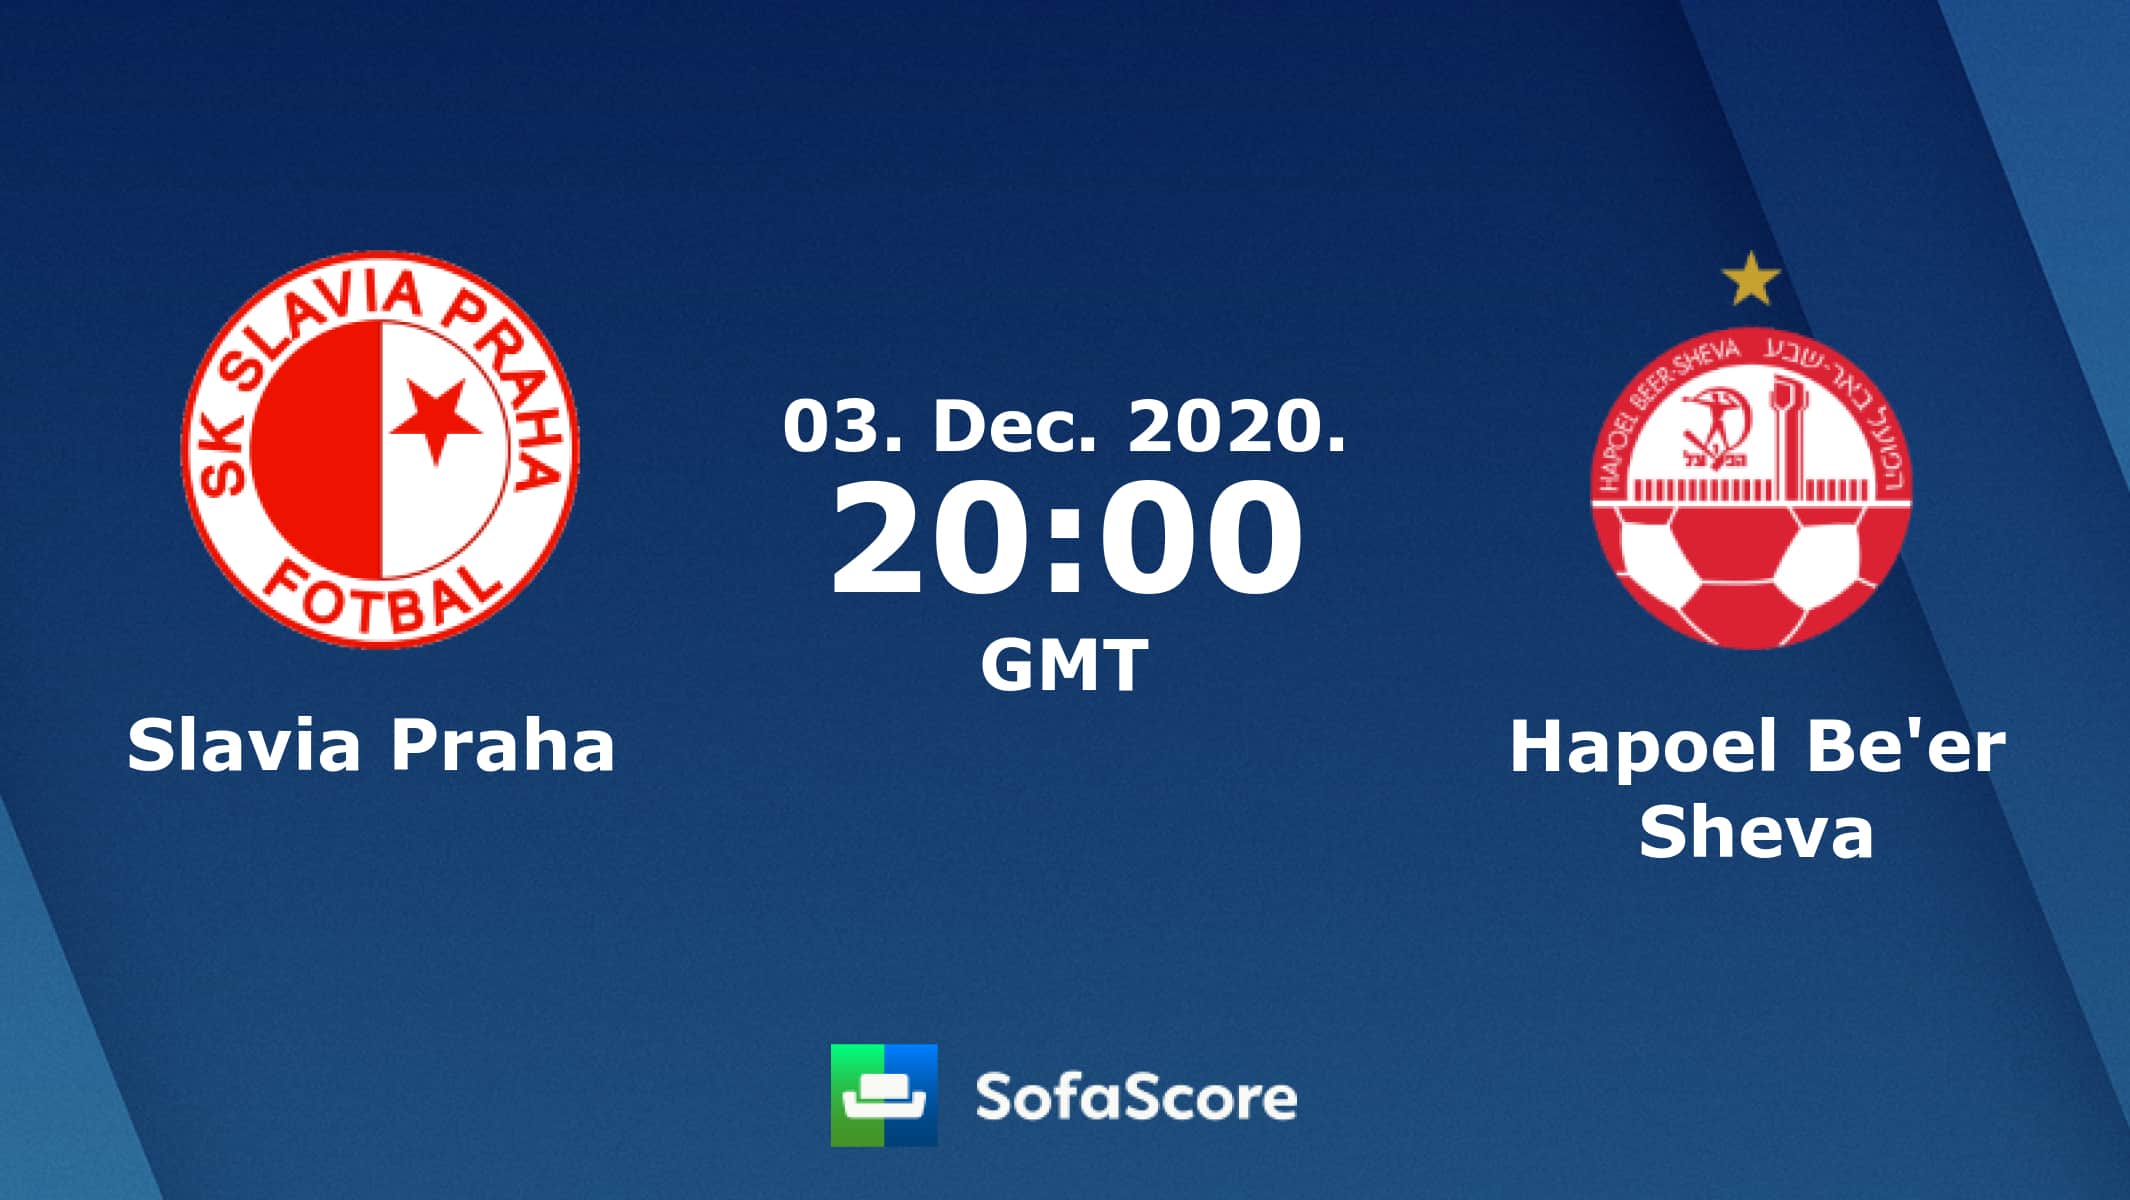 Soi keo Slavia Praha vs Hapoel Be'er Sheva, 4/12/2020 – Cup C2 Chau Au